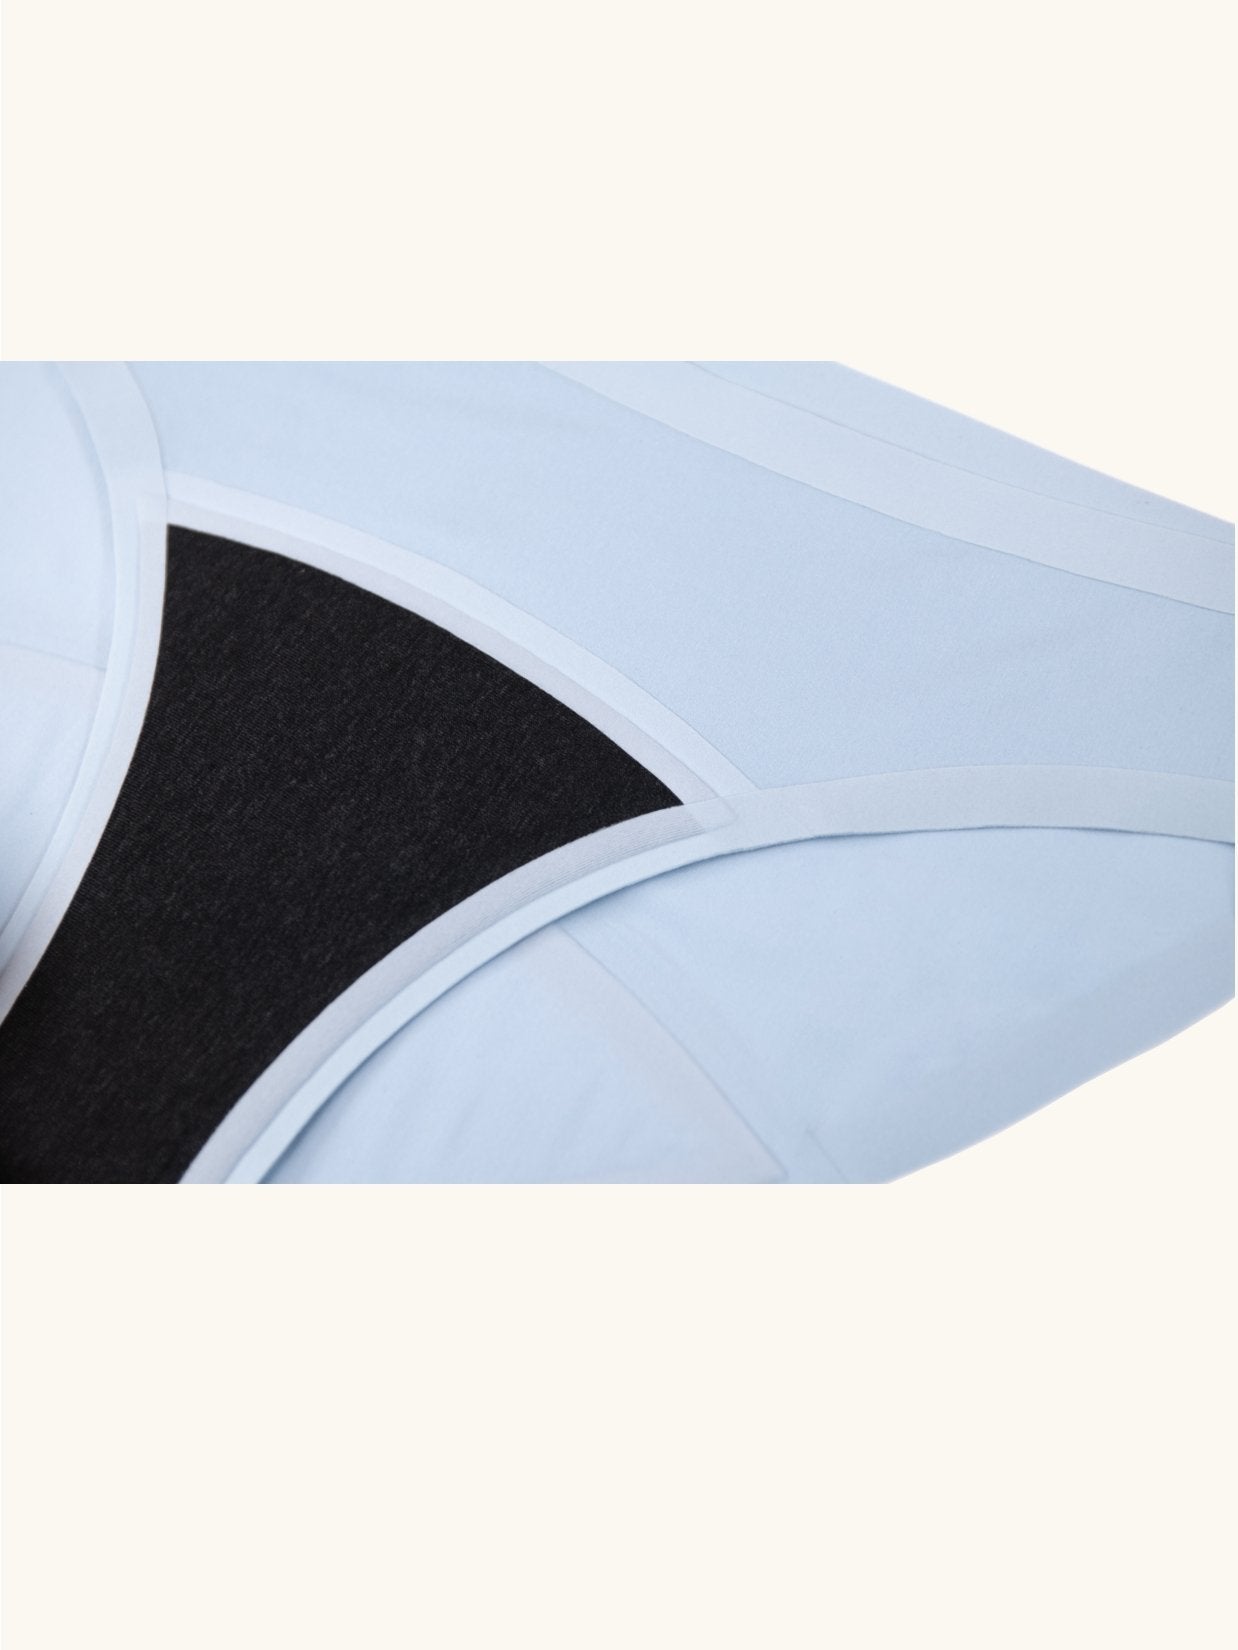 Kiri Daywear & Nightwear Panties Bundle Set - Kiri